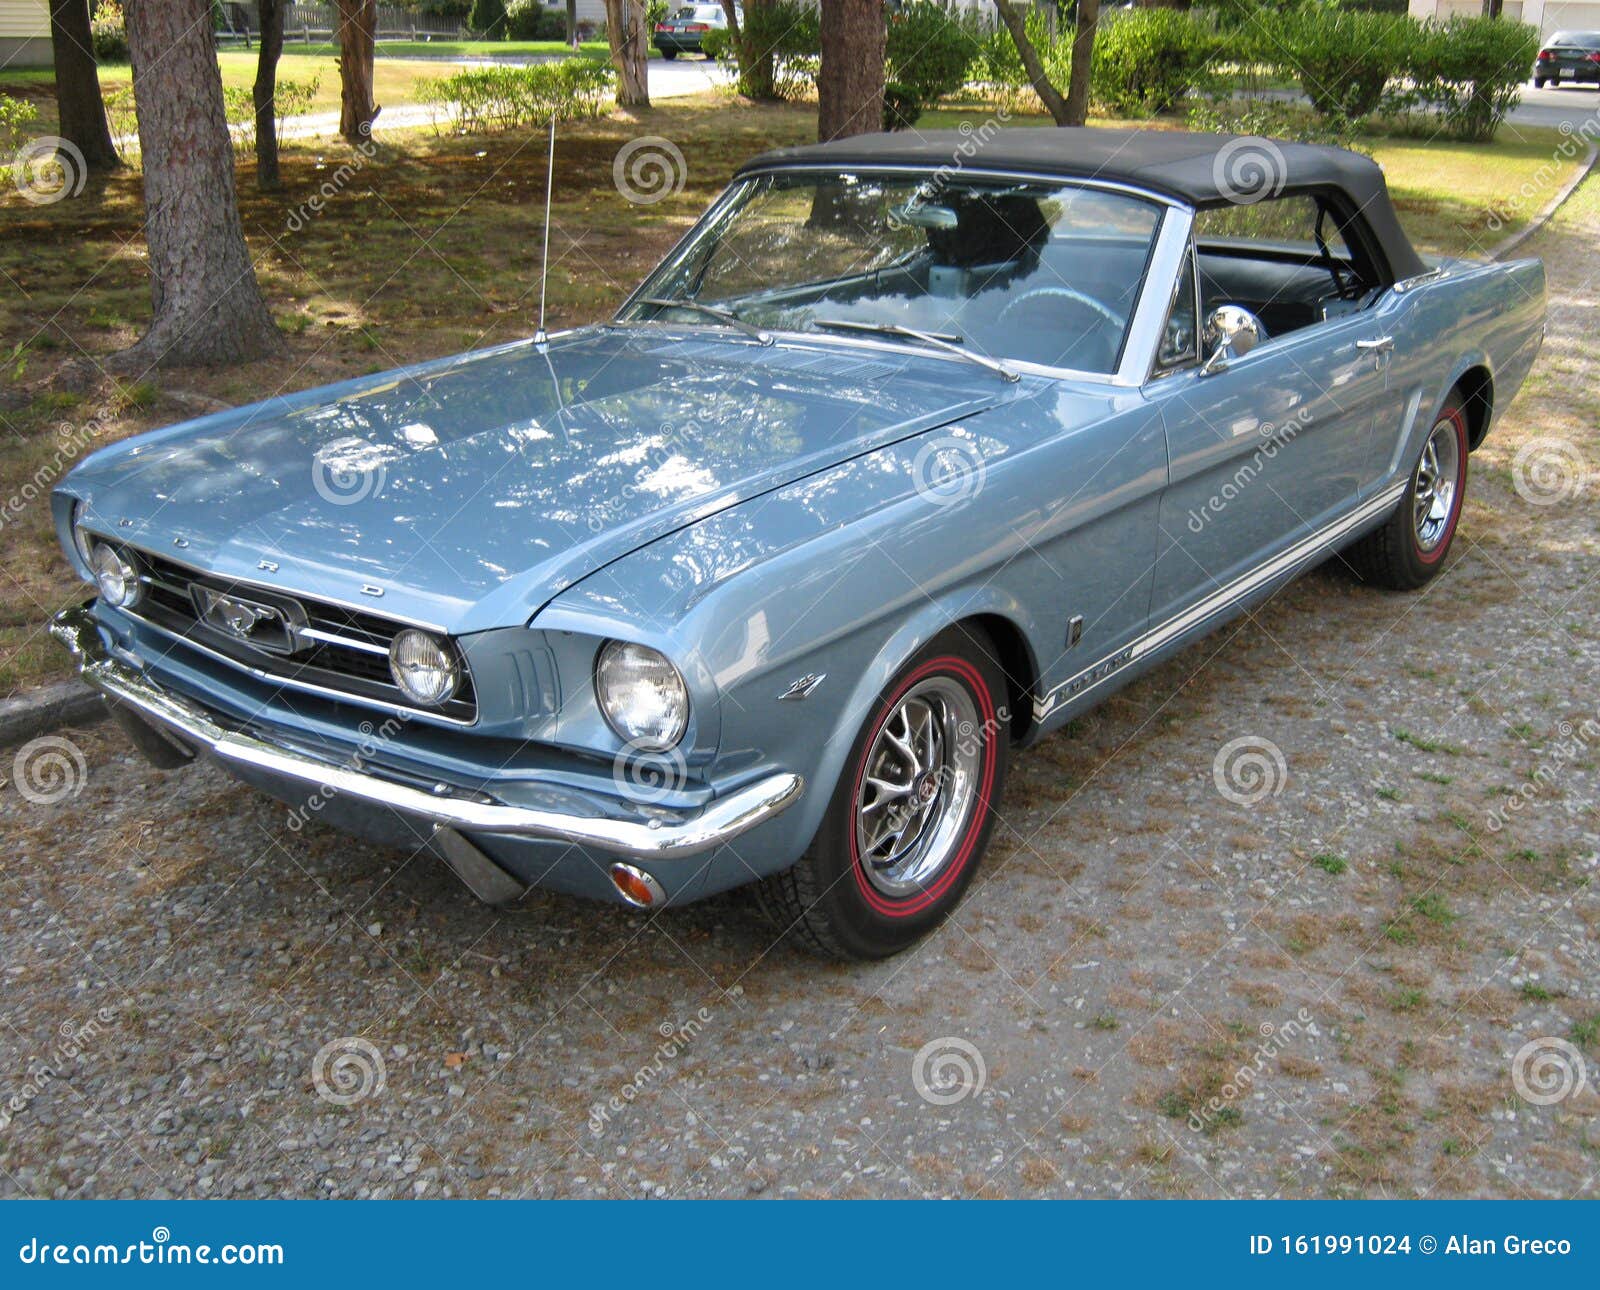 Mustang Azul - Quebra-Cabeça - Geniol